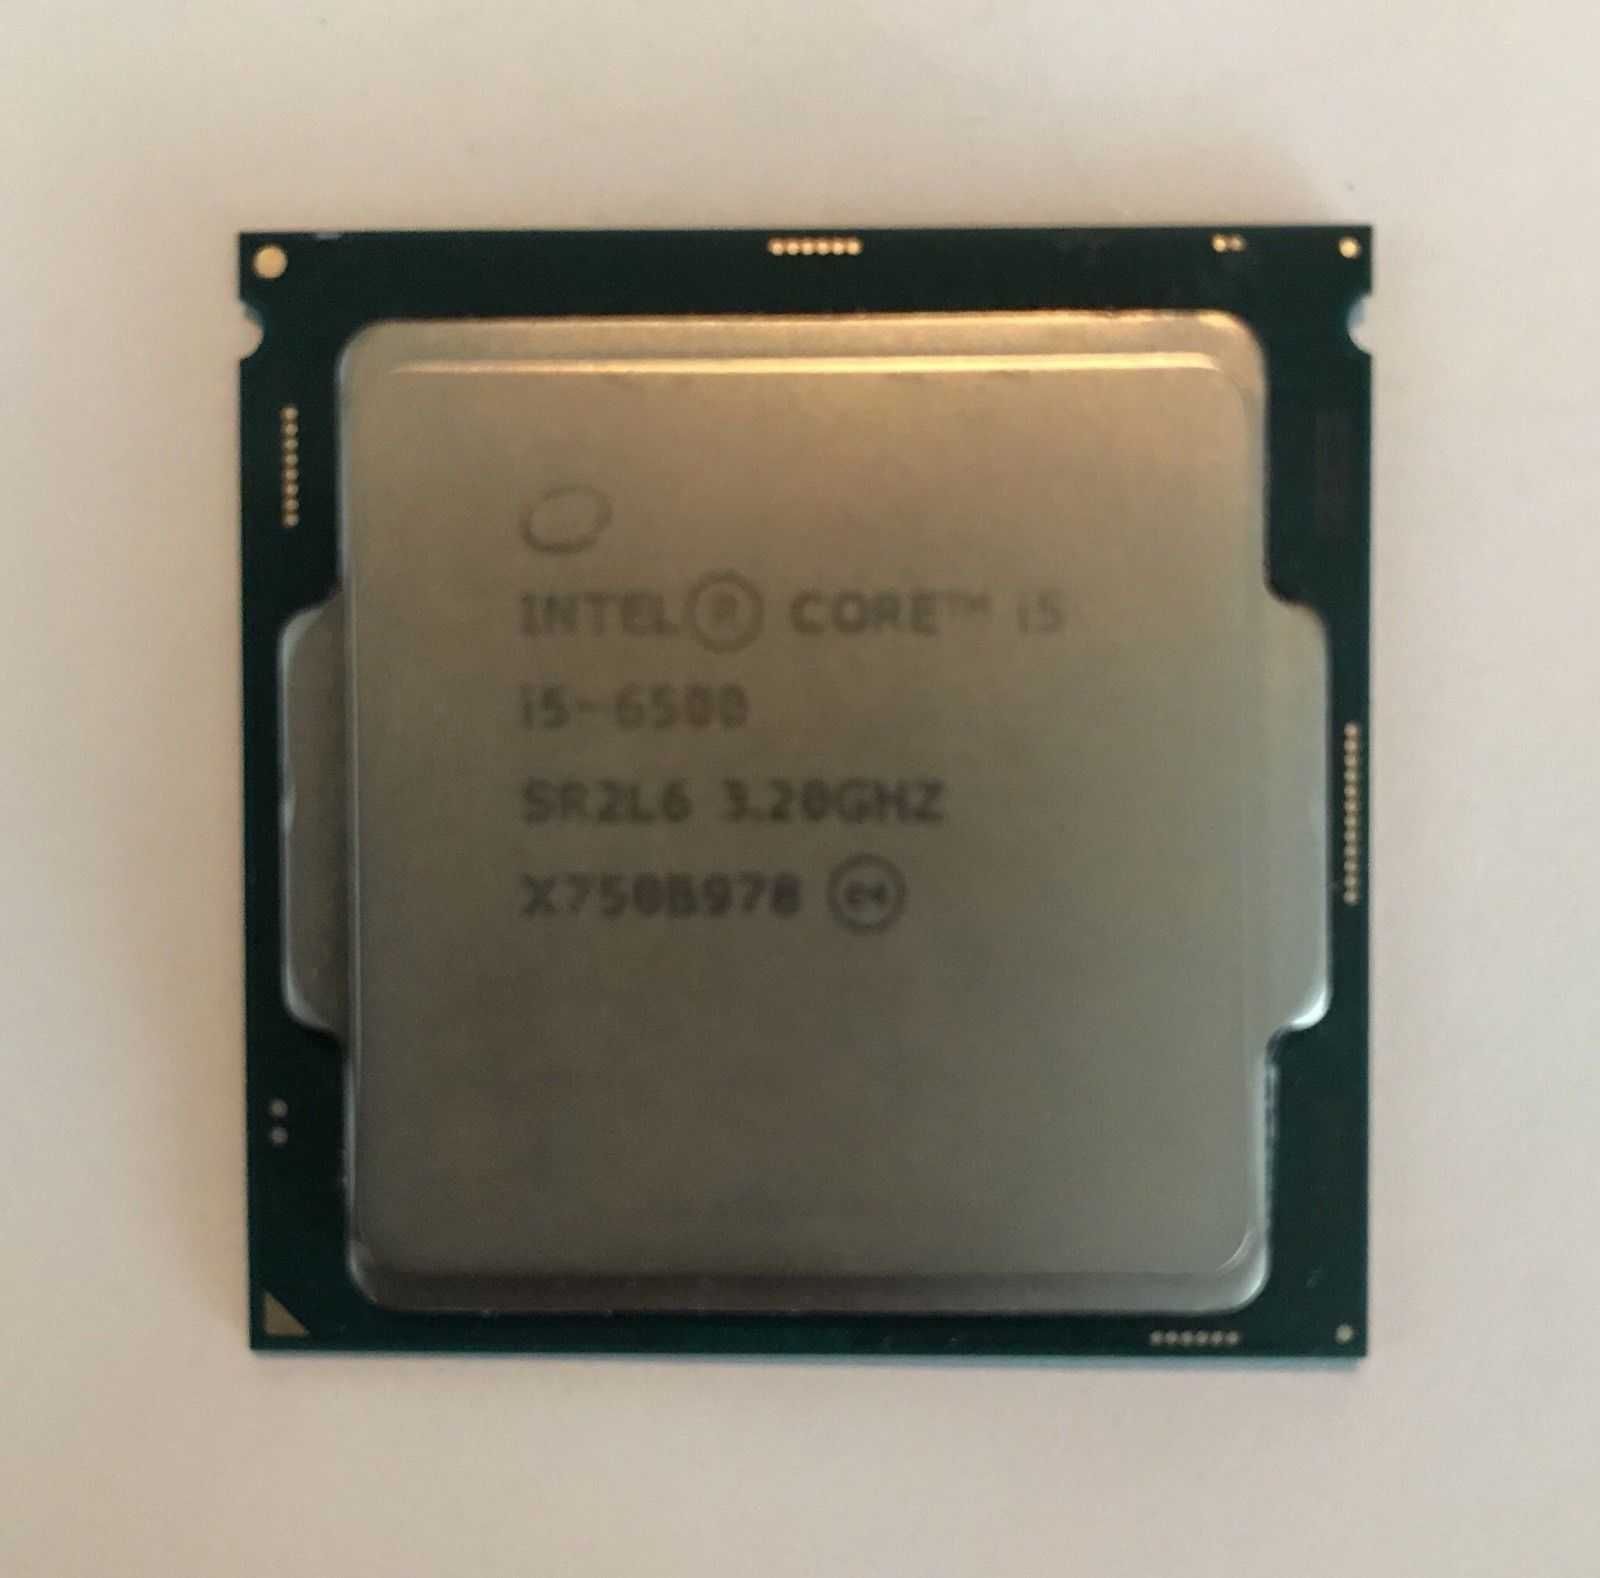 Intel Core i3-6100, i5-6500, 6600k, 7500, i7-6700 s1151